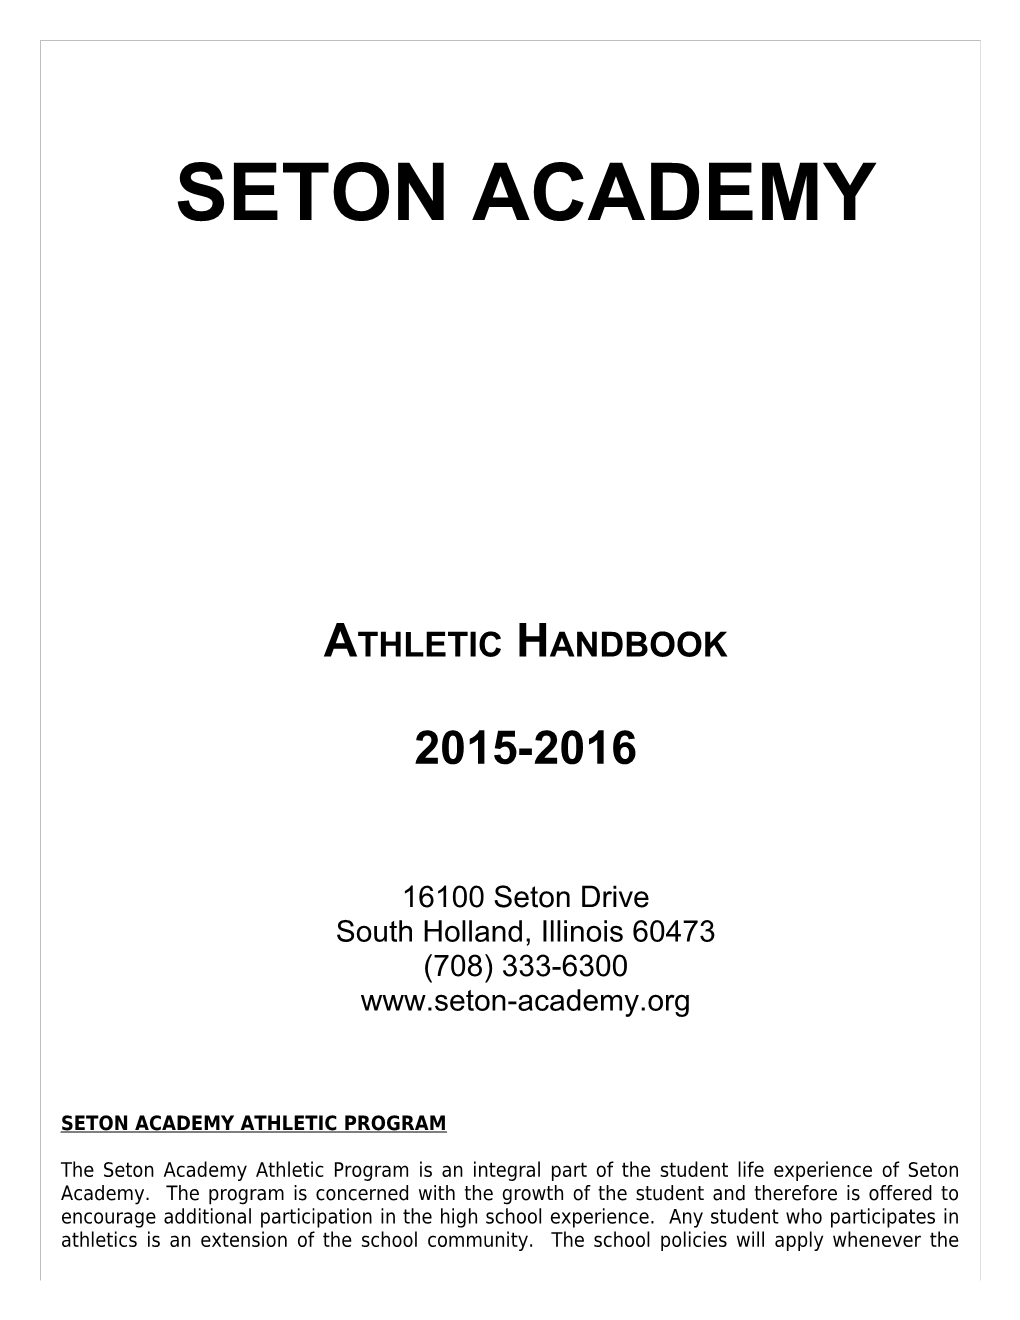 Seton Academy Athletic Program